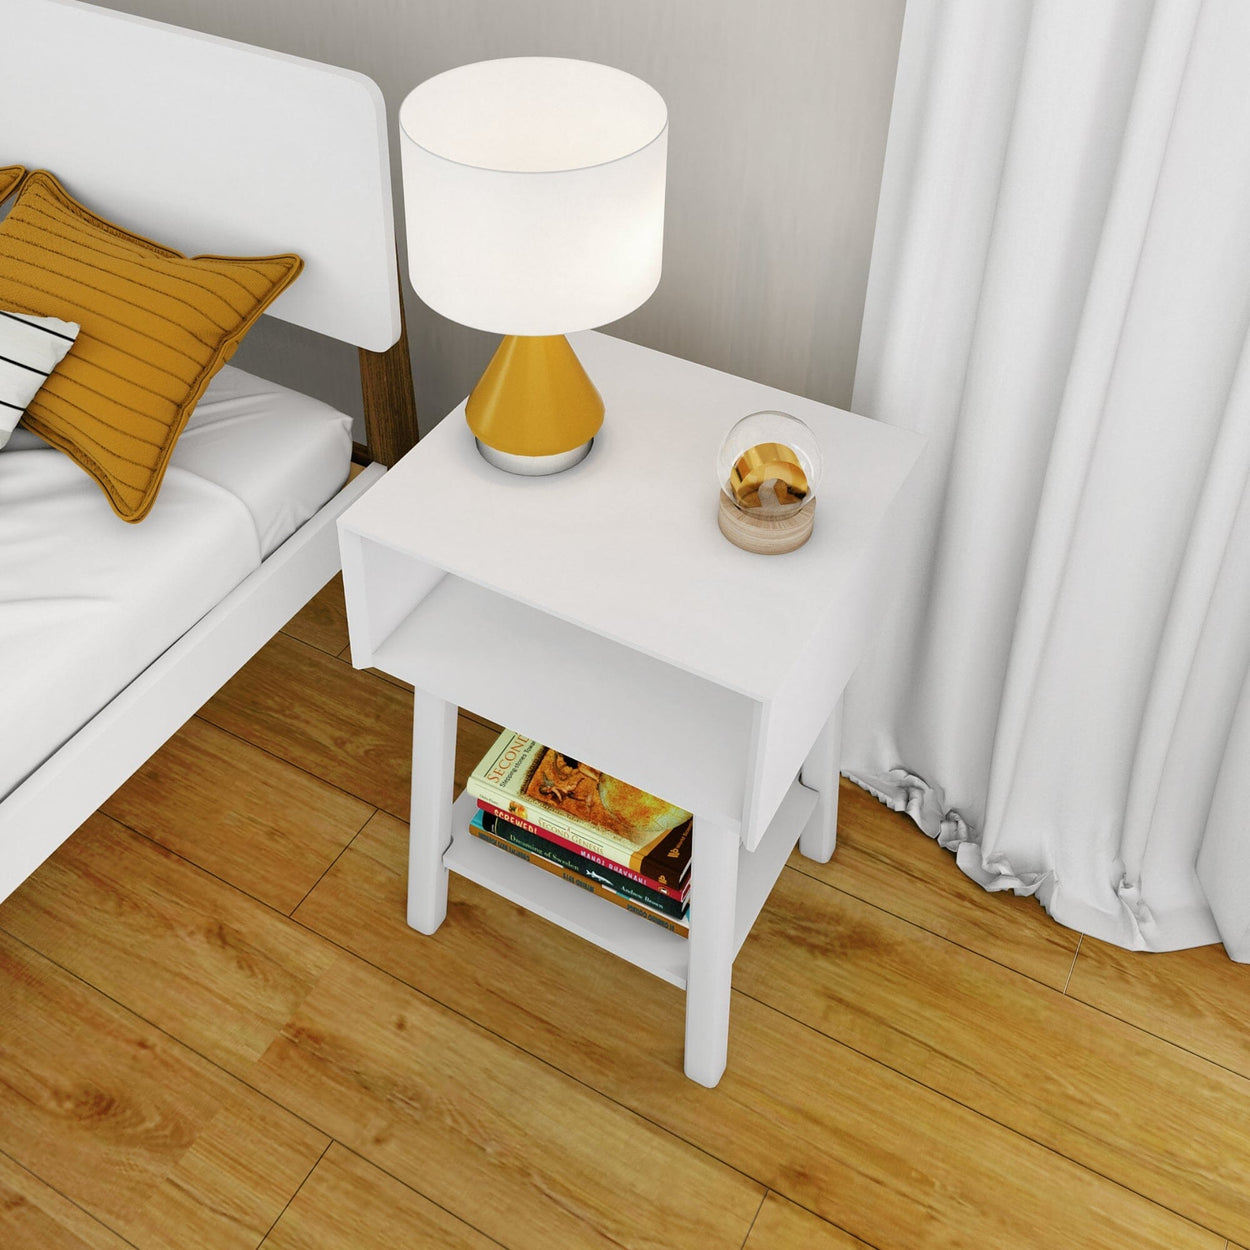 200010-002 : Furniture Mid-Century Modern Cubby Nightstand, White